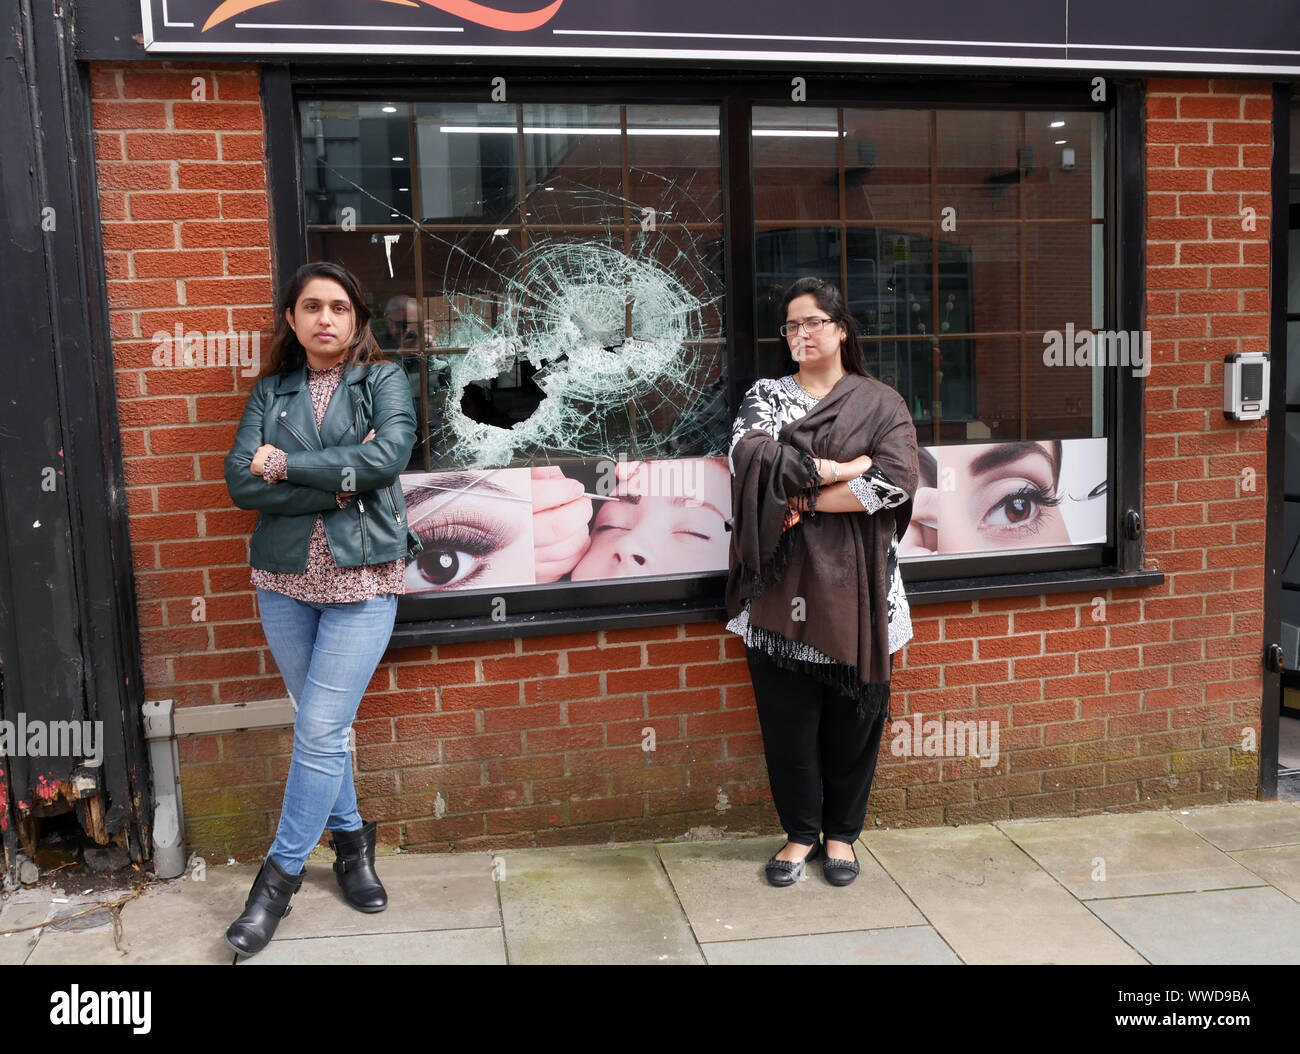 Asian vandalised shop window in Northern England UK Stock Photo